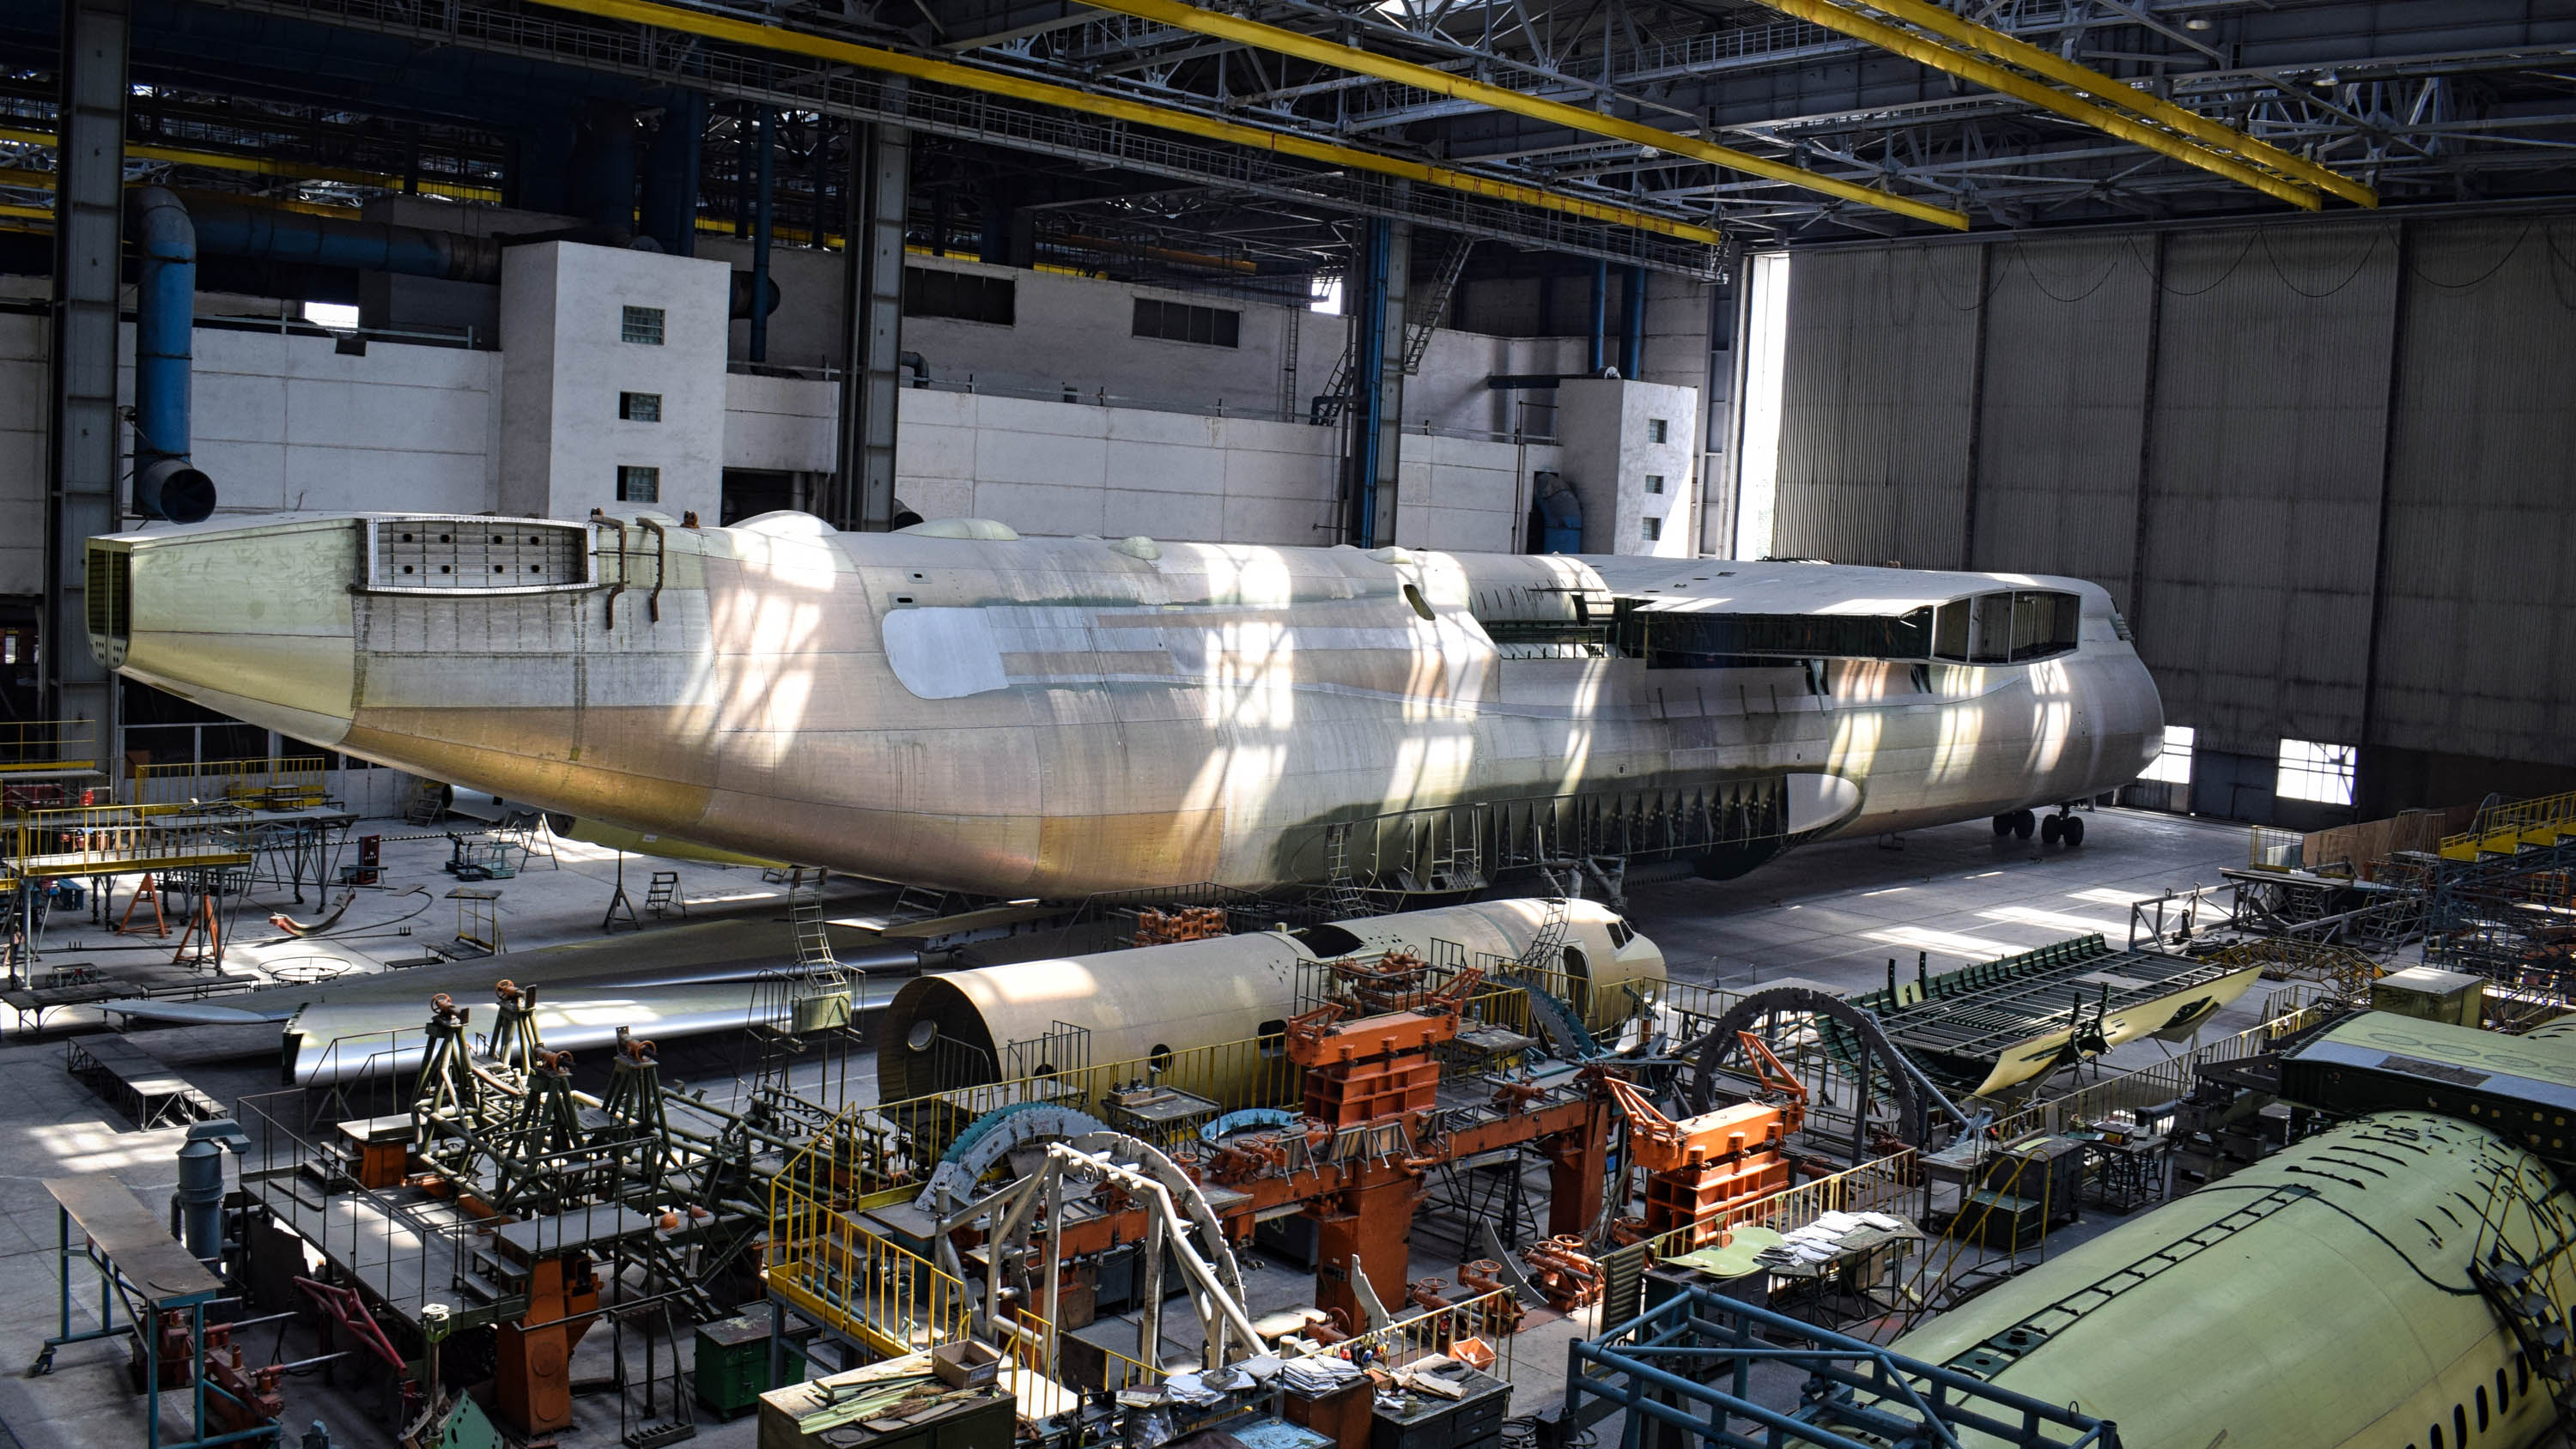 Antonov An-225: Enormous, unfinished plane lies hidden in hangar | CNN  Travel